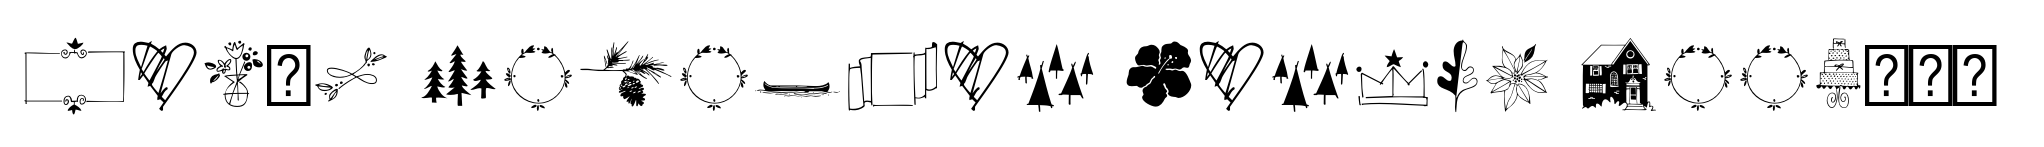 Rae's Monogram Family Doodles One image